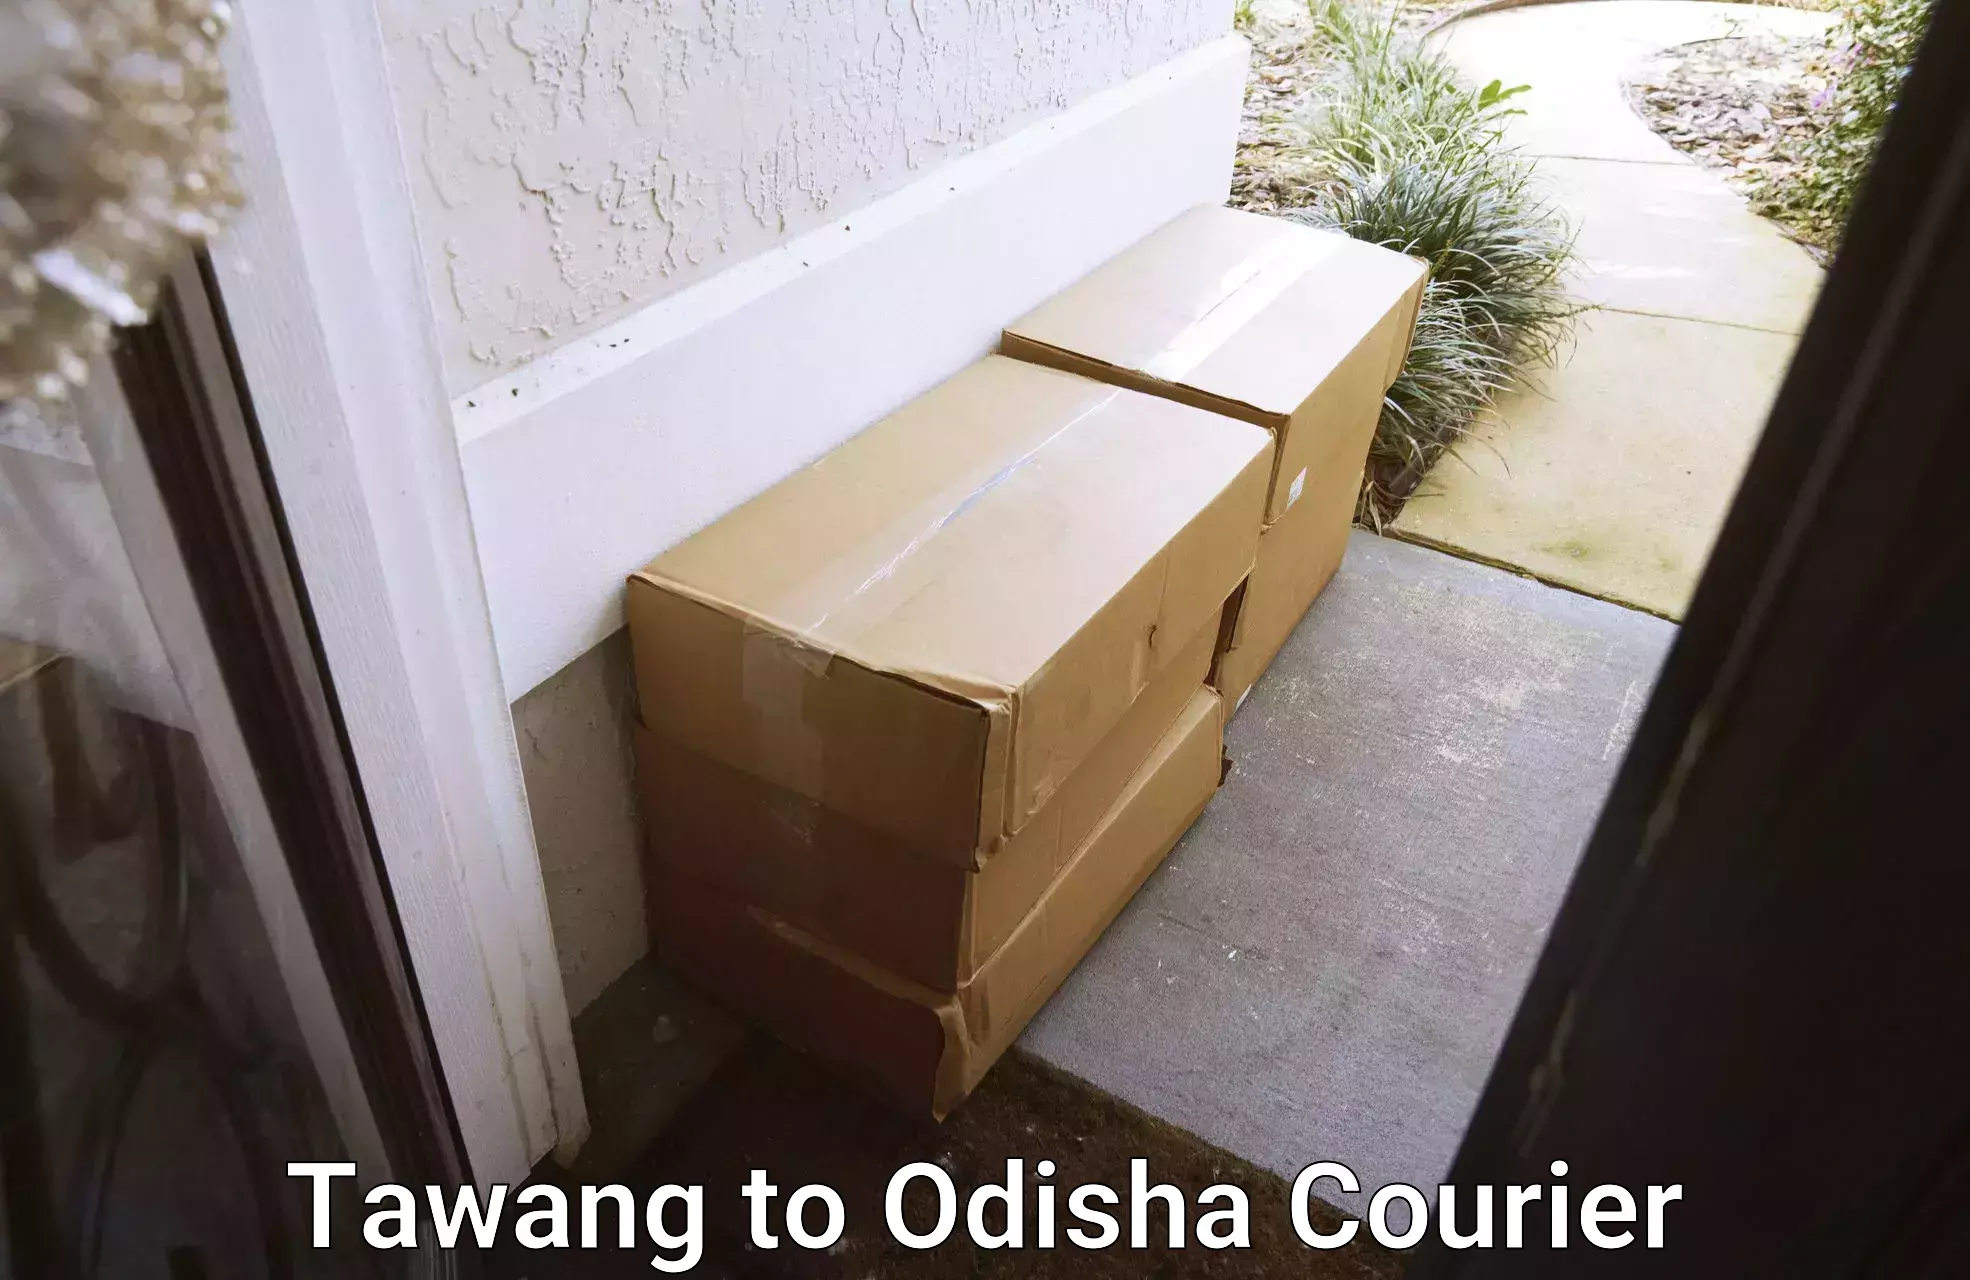 Cash on delivery service Tawang to Odisha